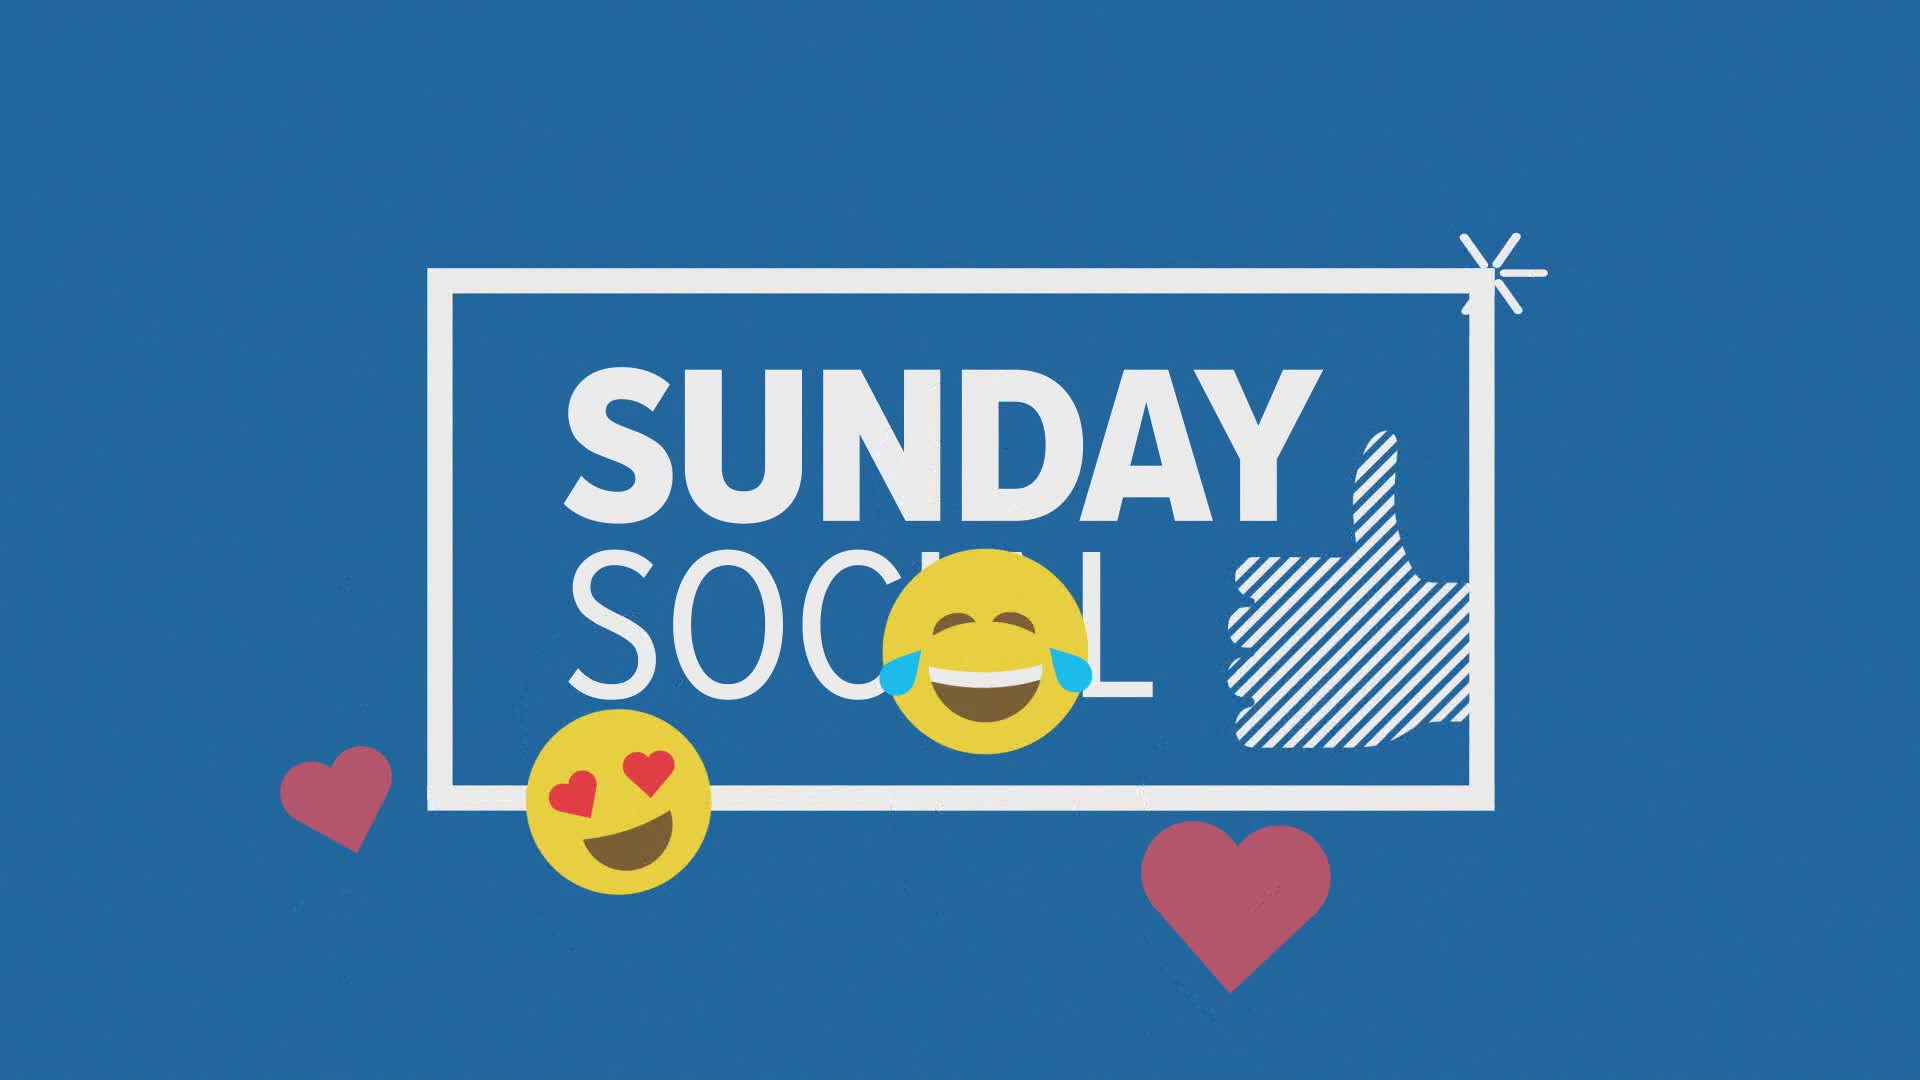 Samantha York and Ryan Breton share their favorite social media posts of the week.